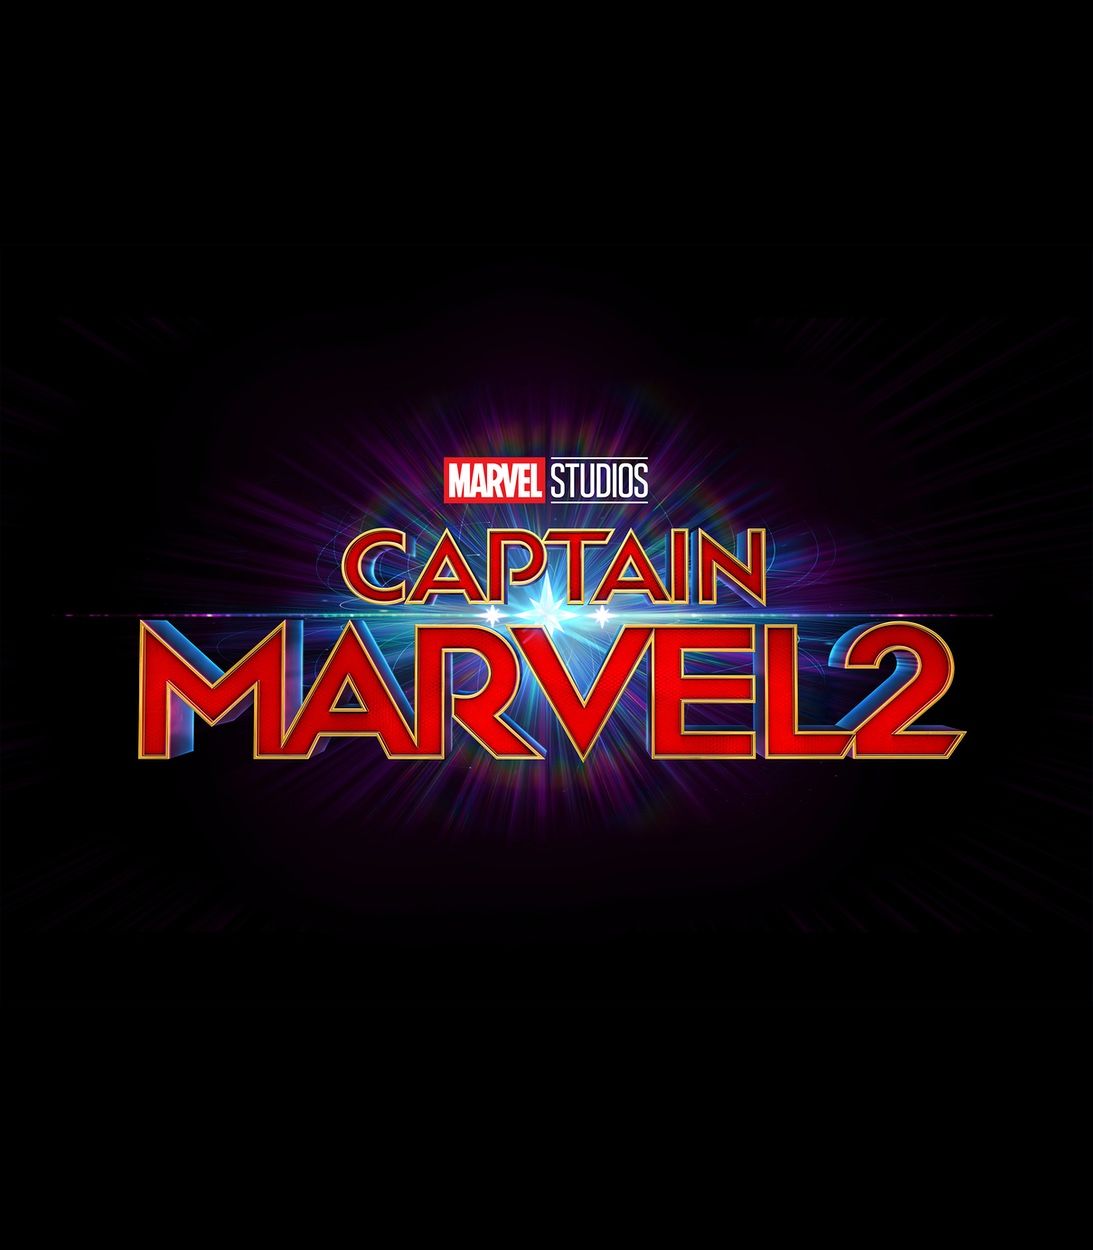 Logotipo de la película Capitana Marvel 2